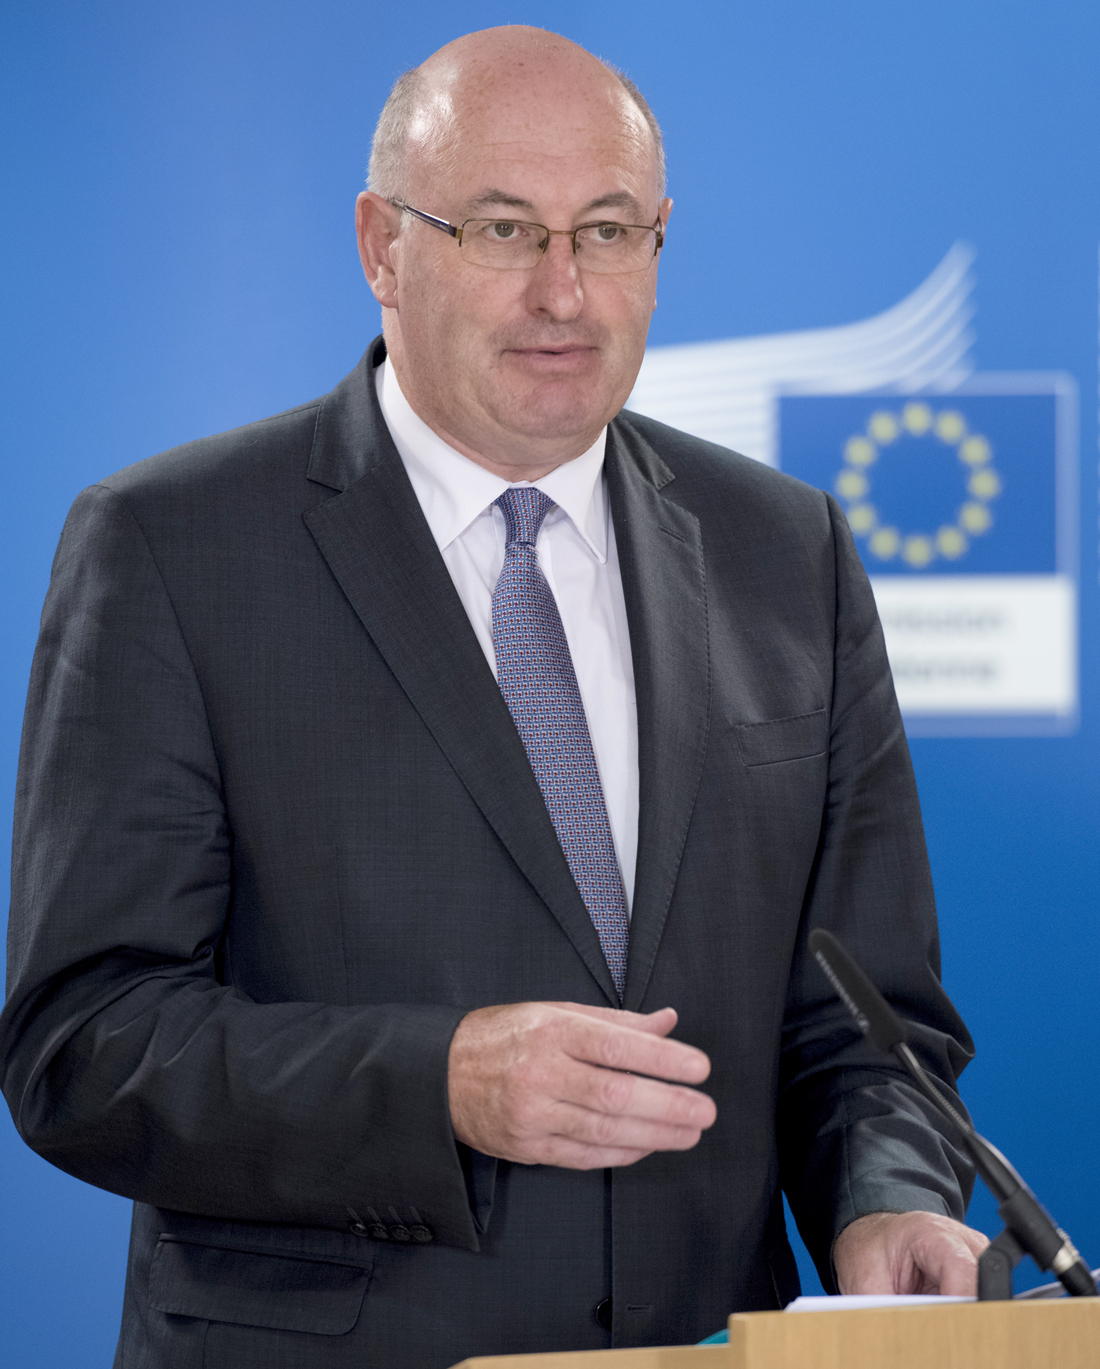 EU Commissioner for agriculture and rural development Phil Hogan